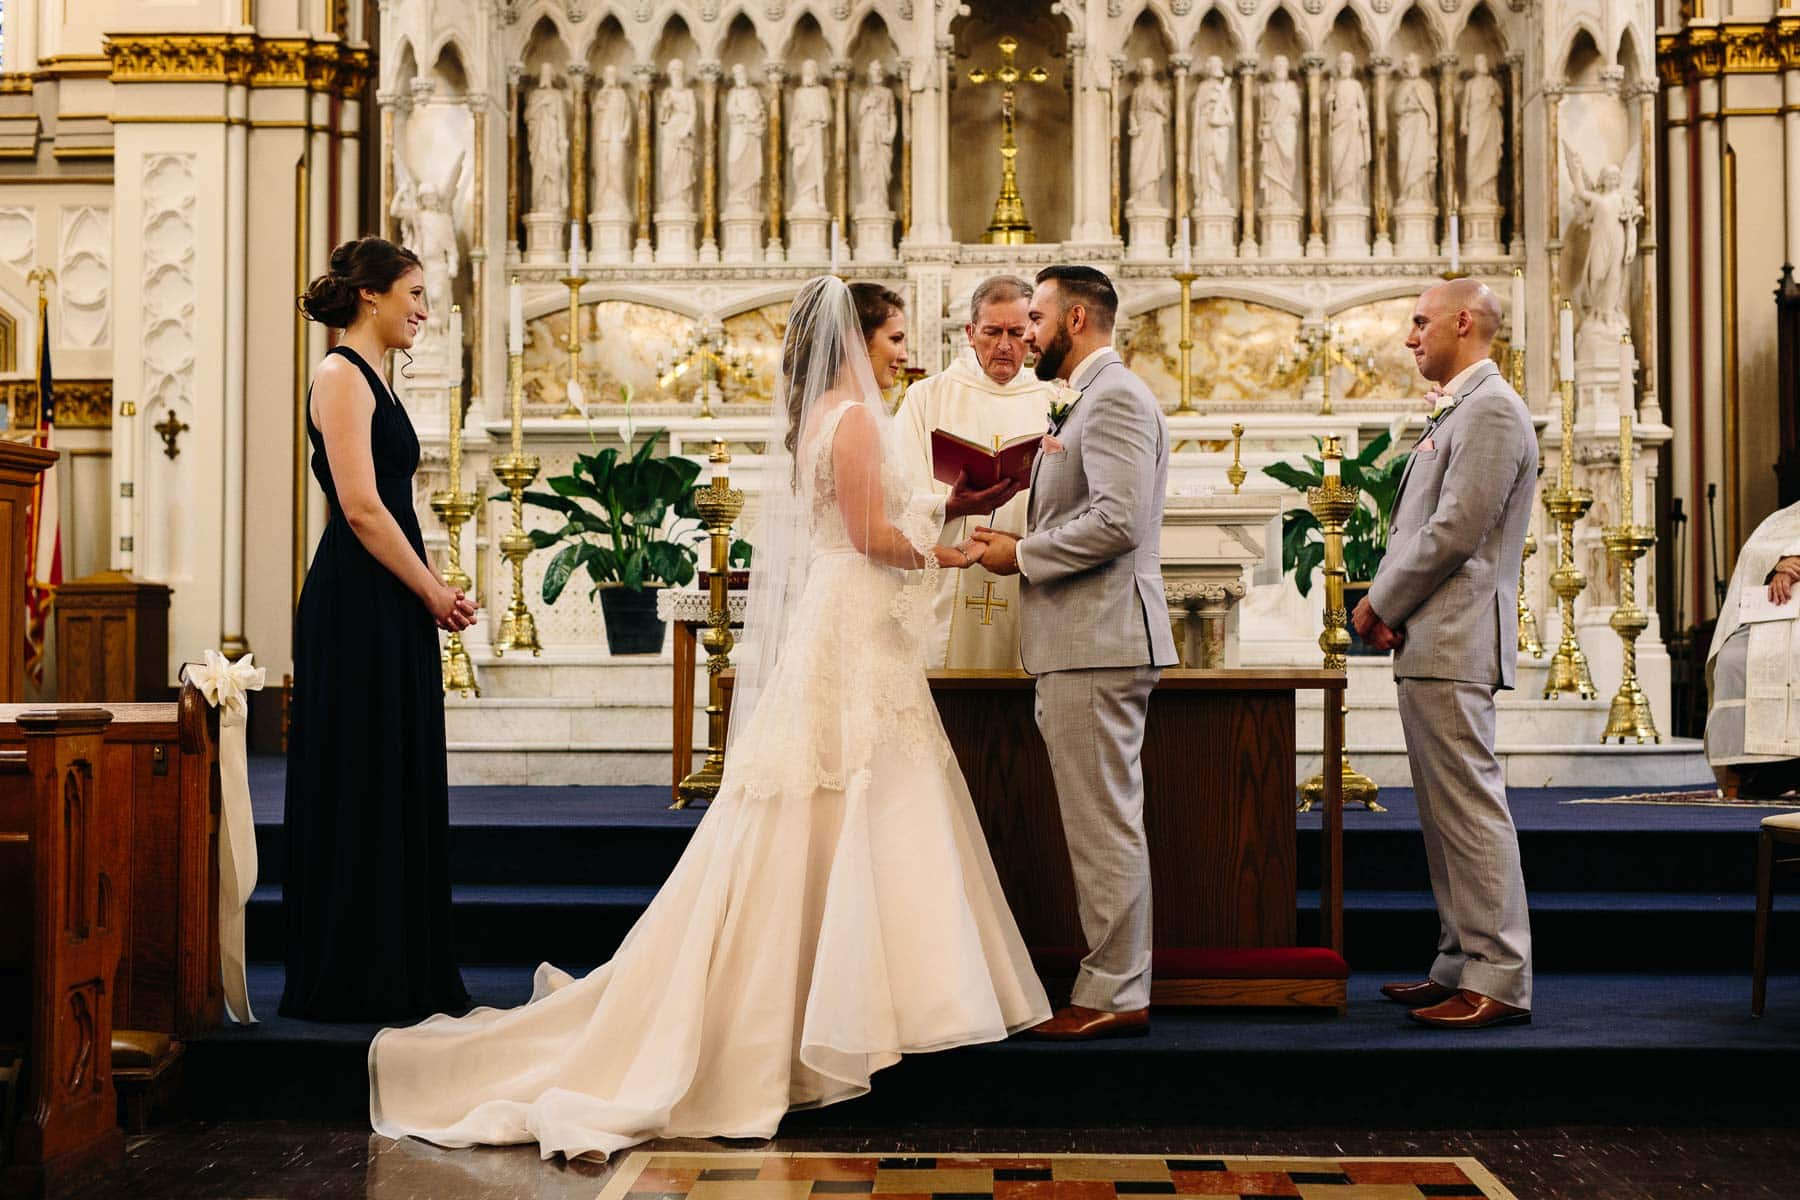 Peggy and Anthony's wedding ceremony at Saint Mary - Saint Catherine of Siena in Charlestown, MA | Kelly Benvenuto Photography | Boston Wedding Photographer